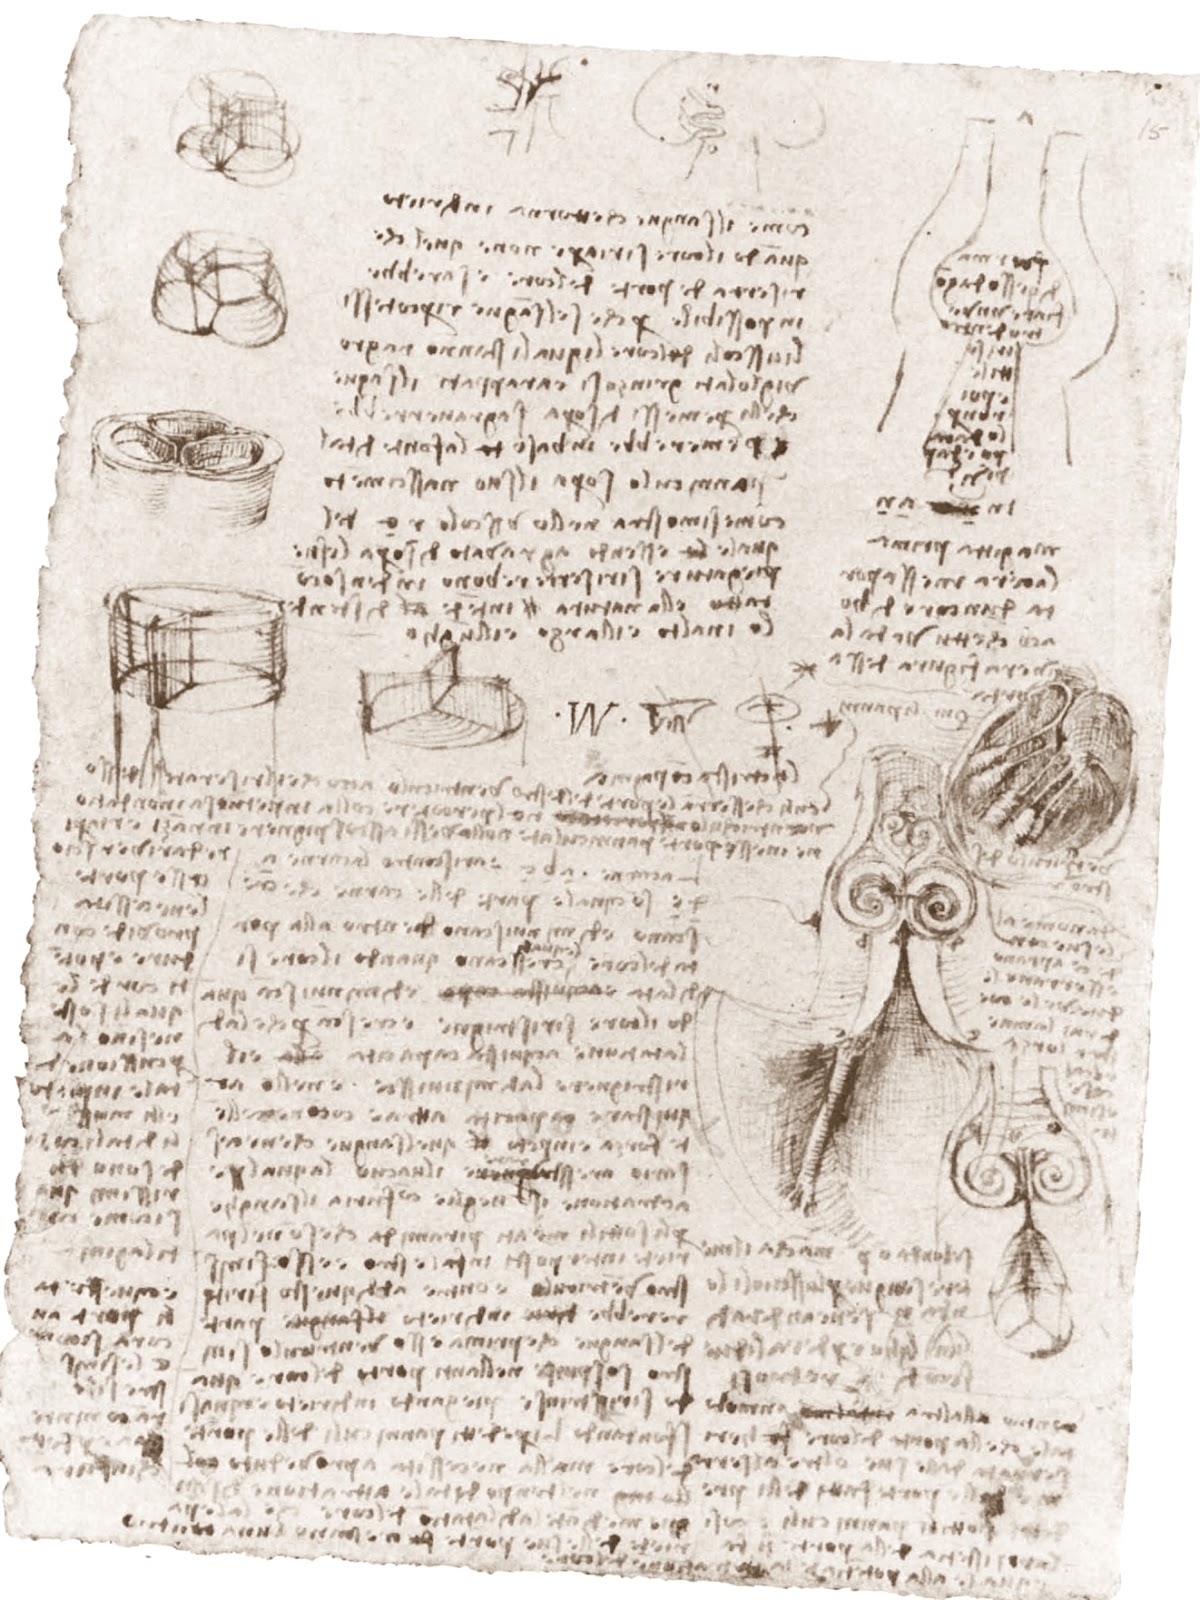 Leonardo+da+Vinci-1452-1519 (813).jpg